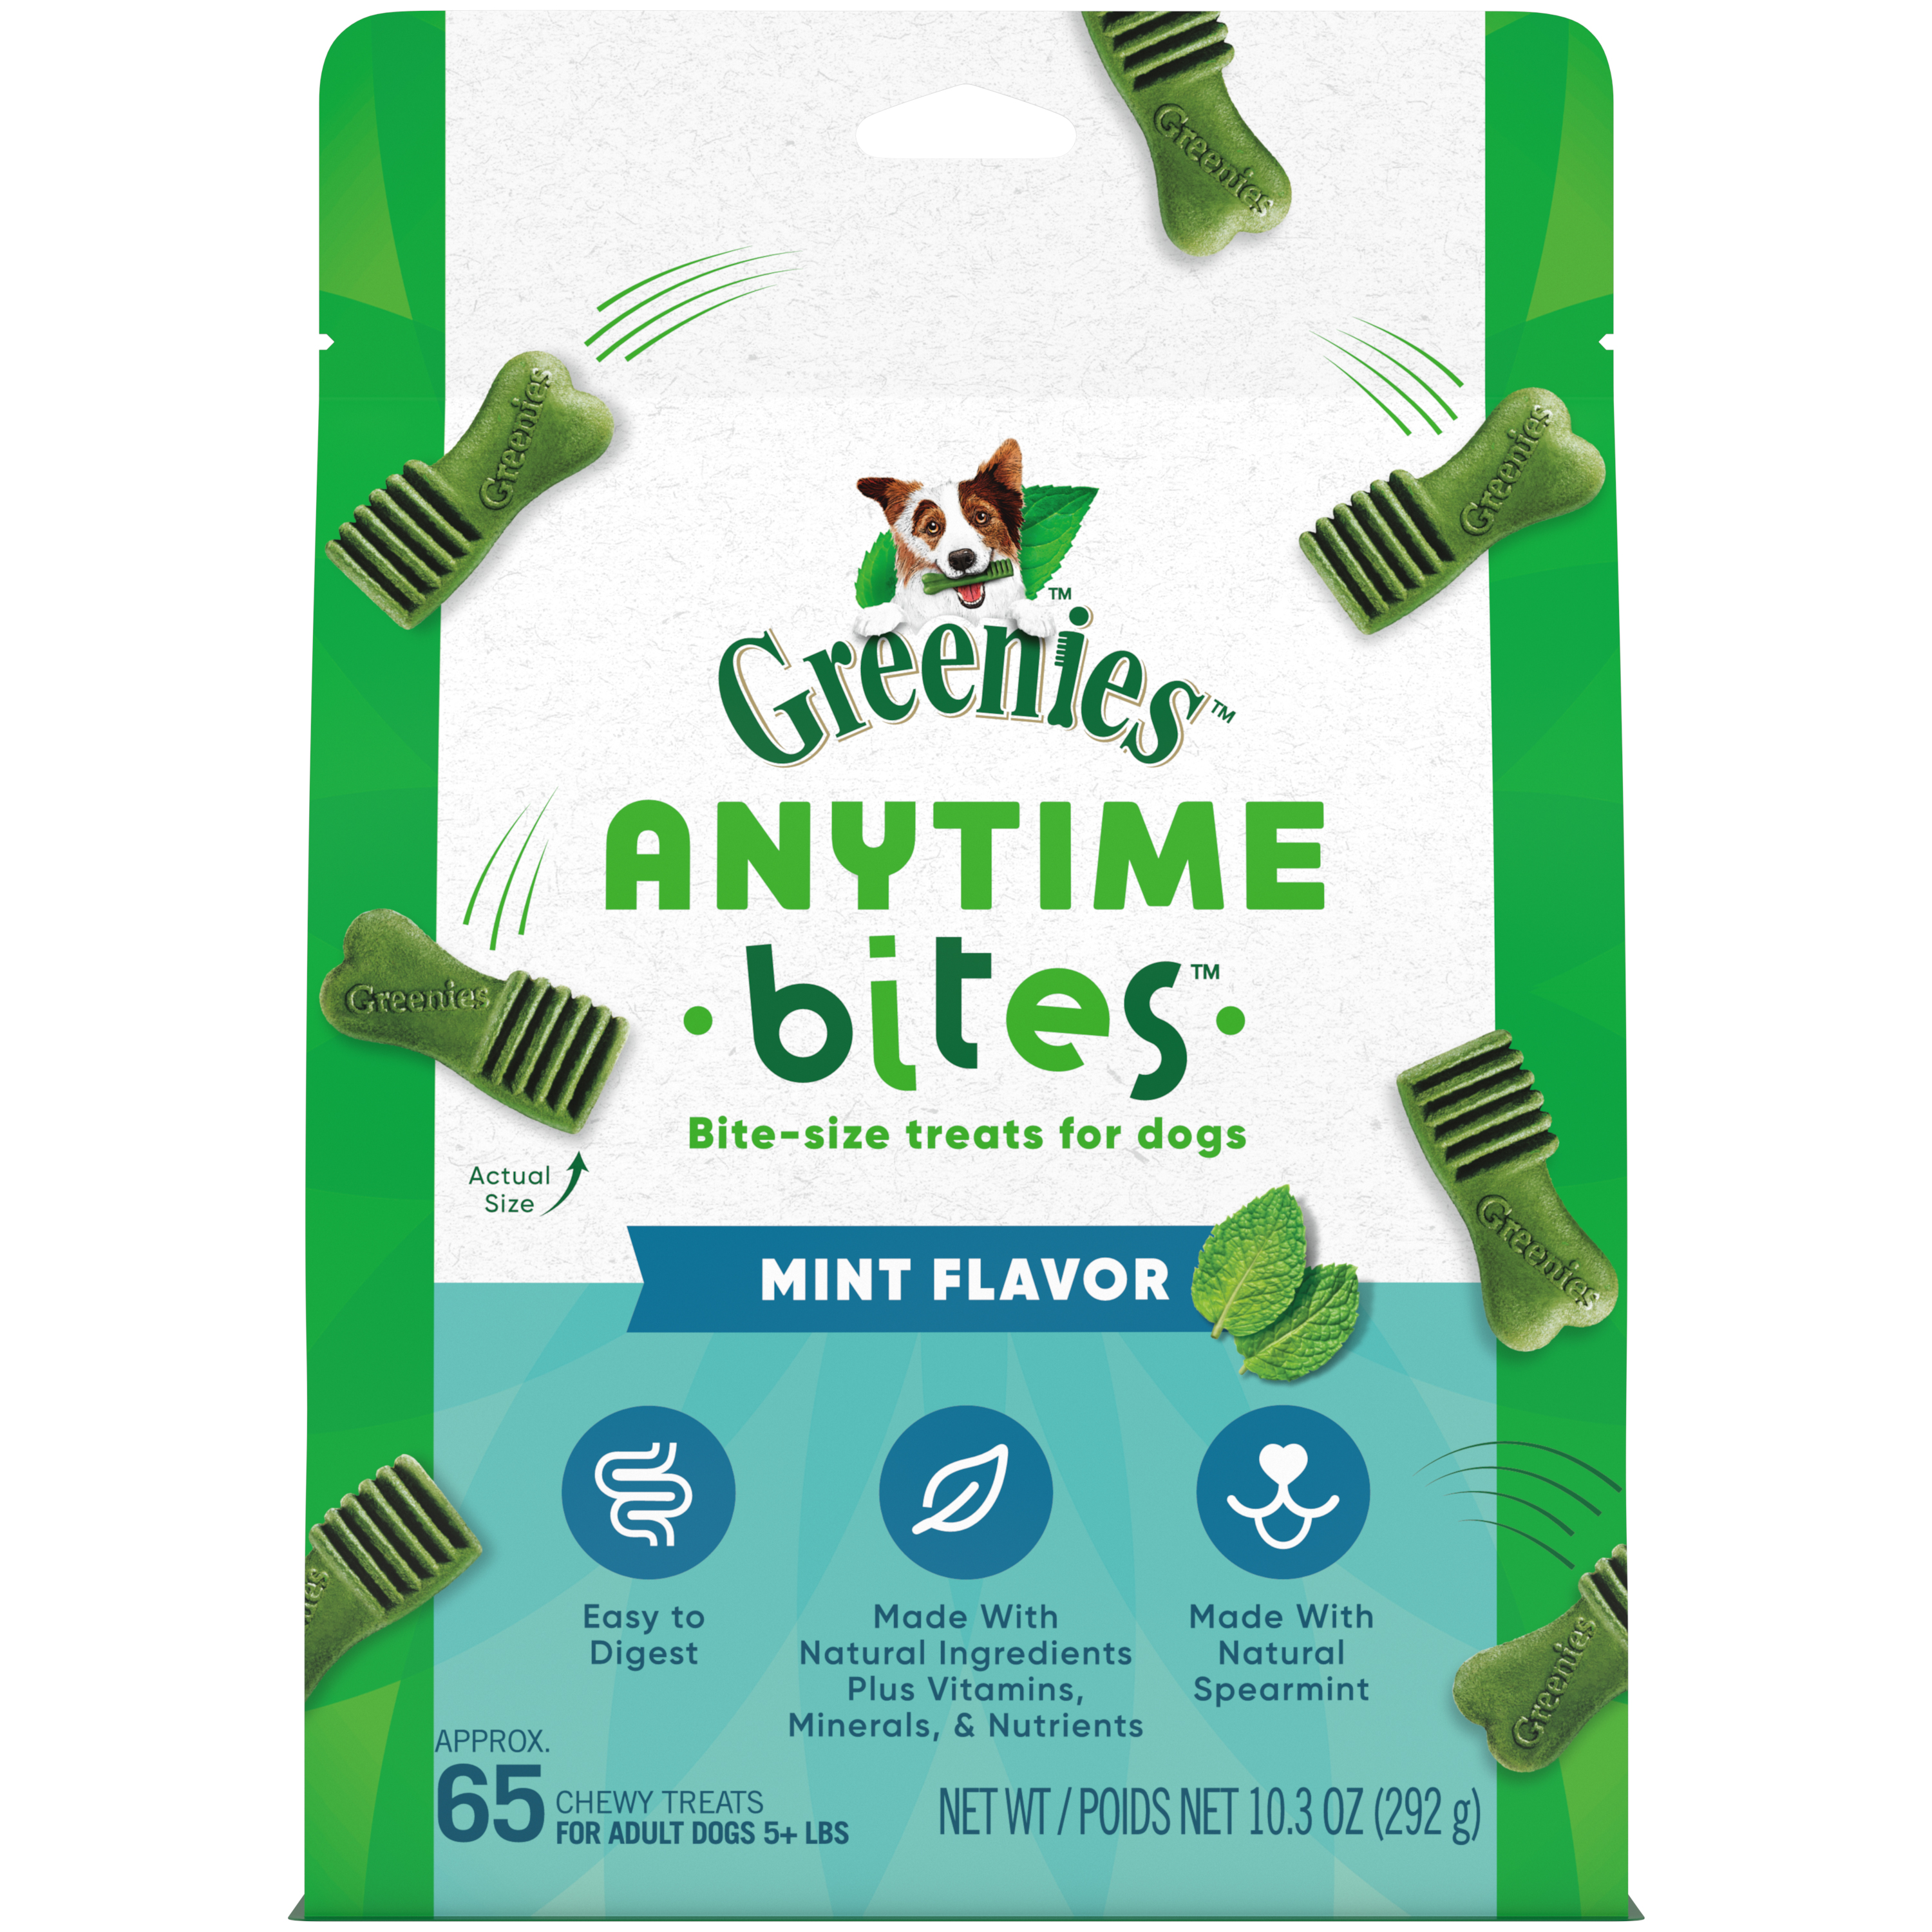 10.34 oz. Greenies Anytime Bites Mint - Health/First Aid